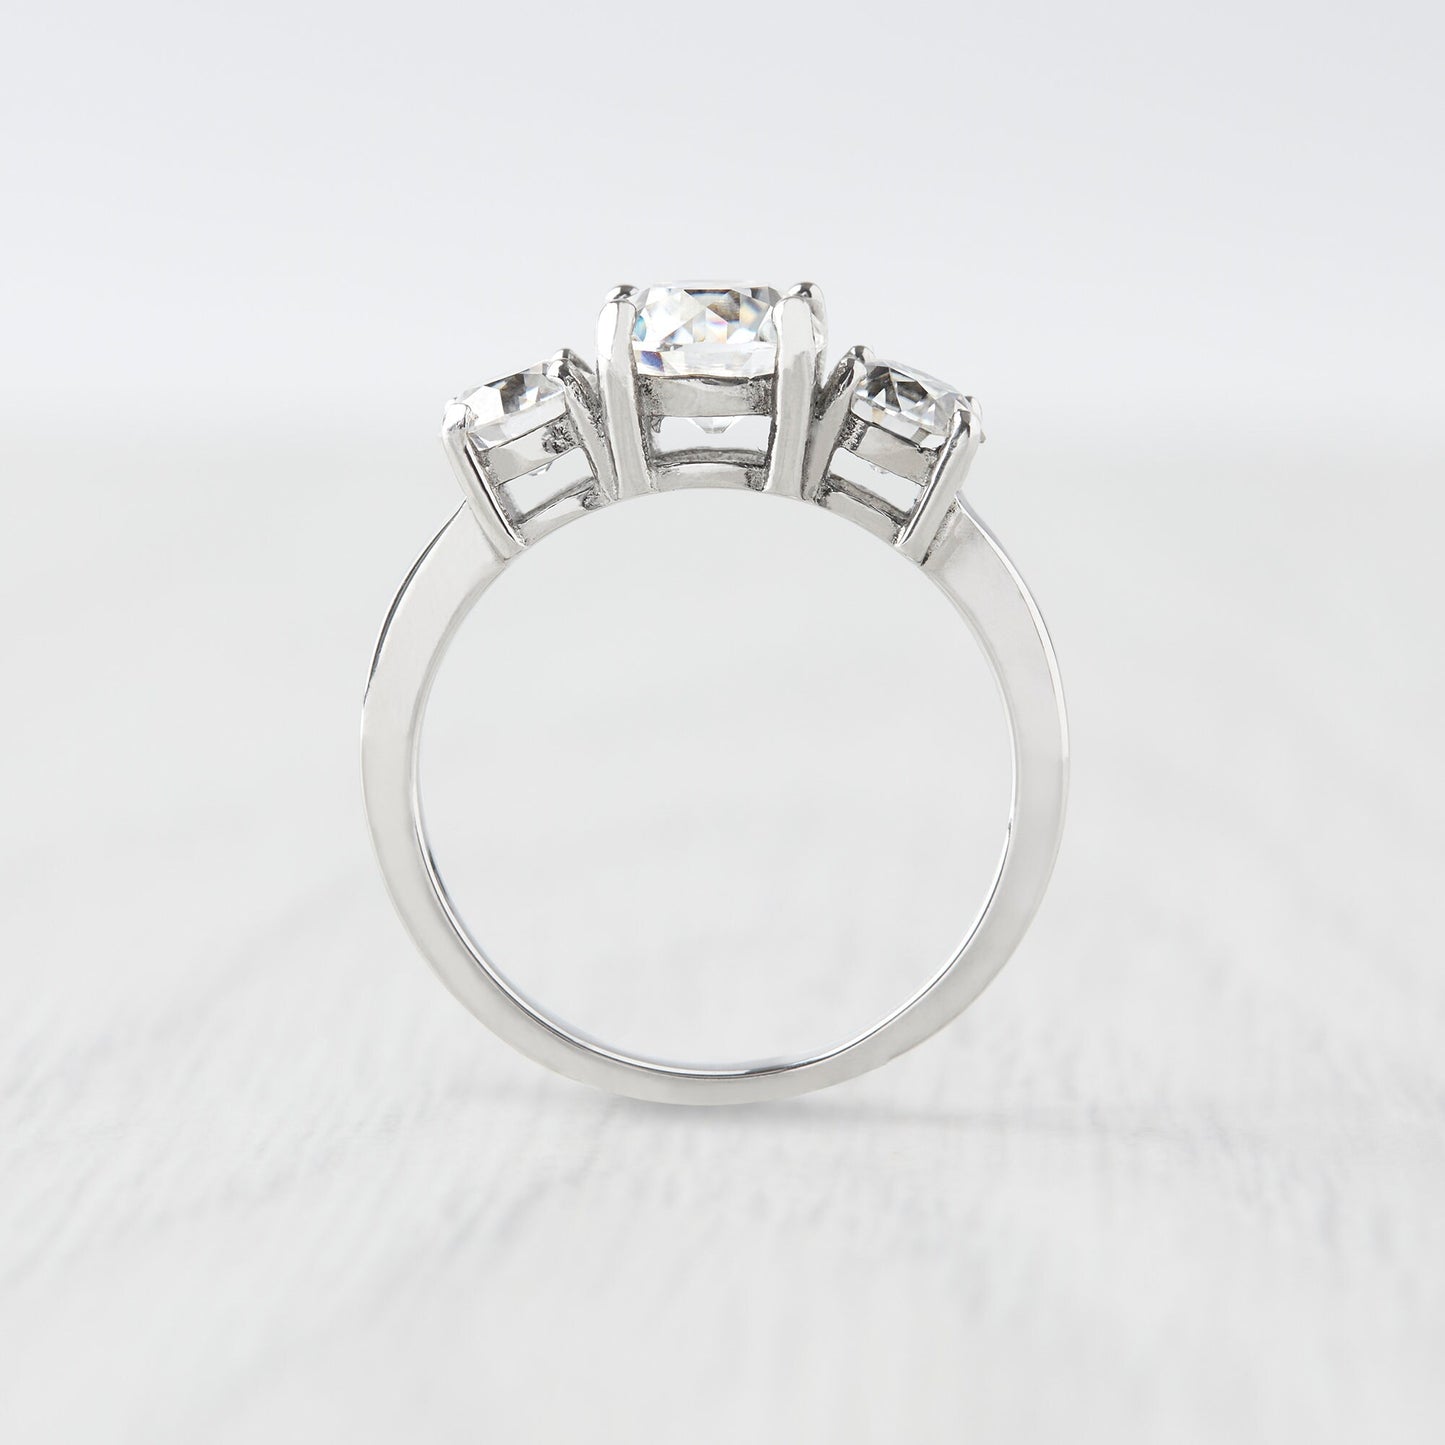 Genuine moissanite Old European Cut  3 stone Trilogy Ring in White Gold or Titanium  - engagement ring - handmade ring